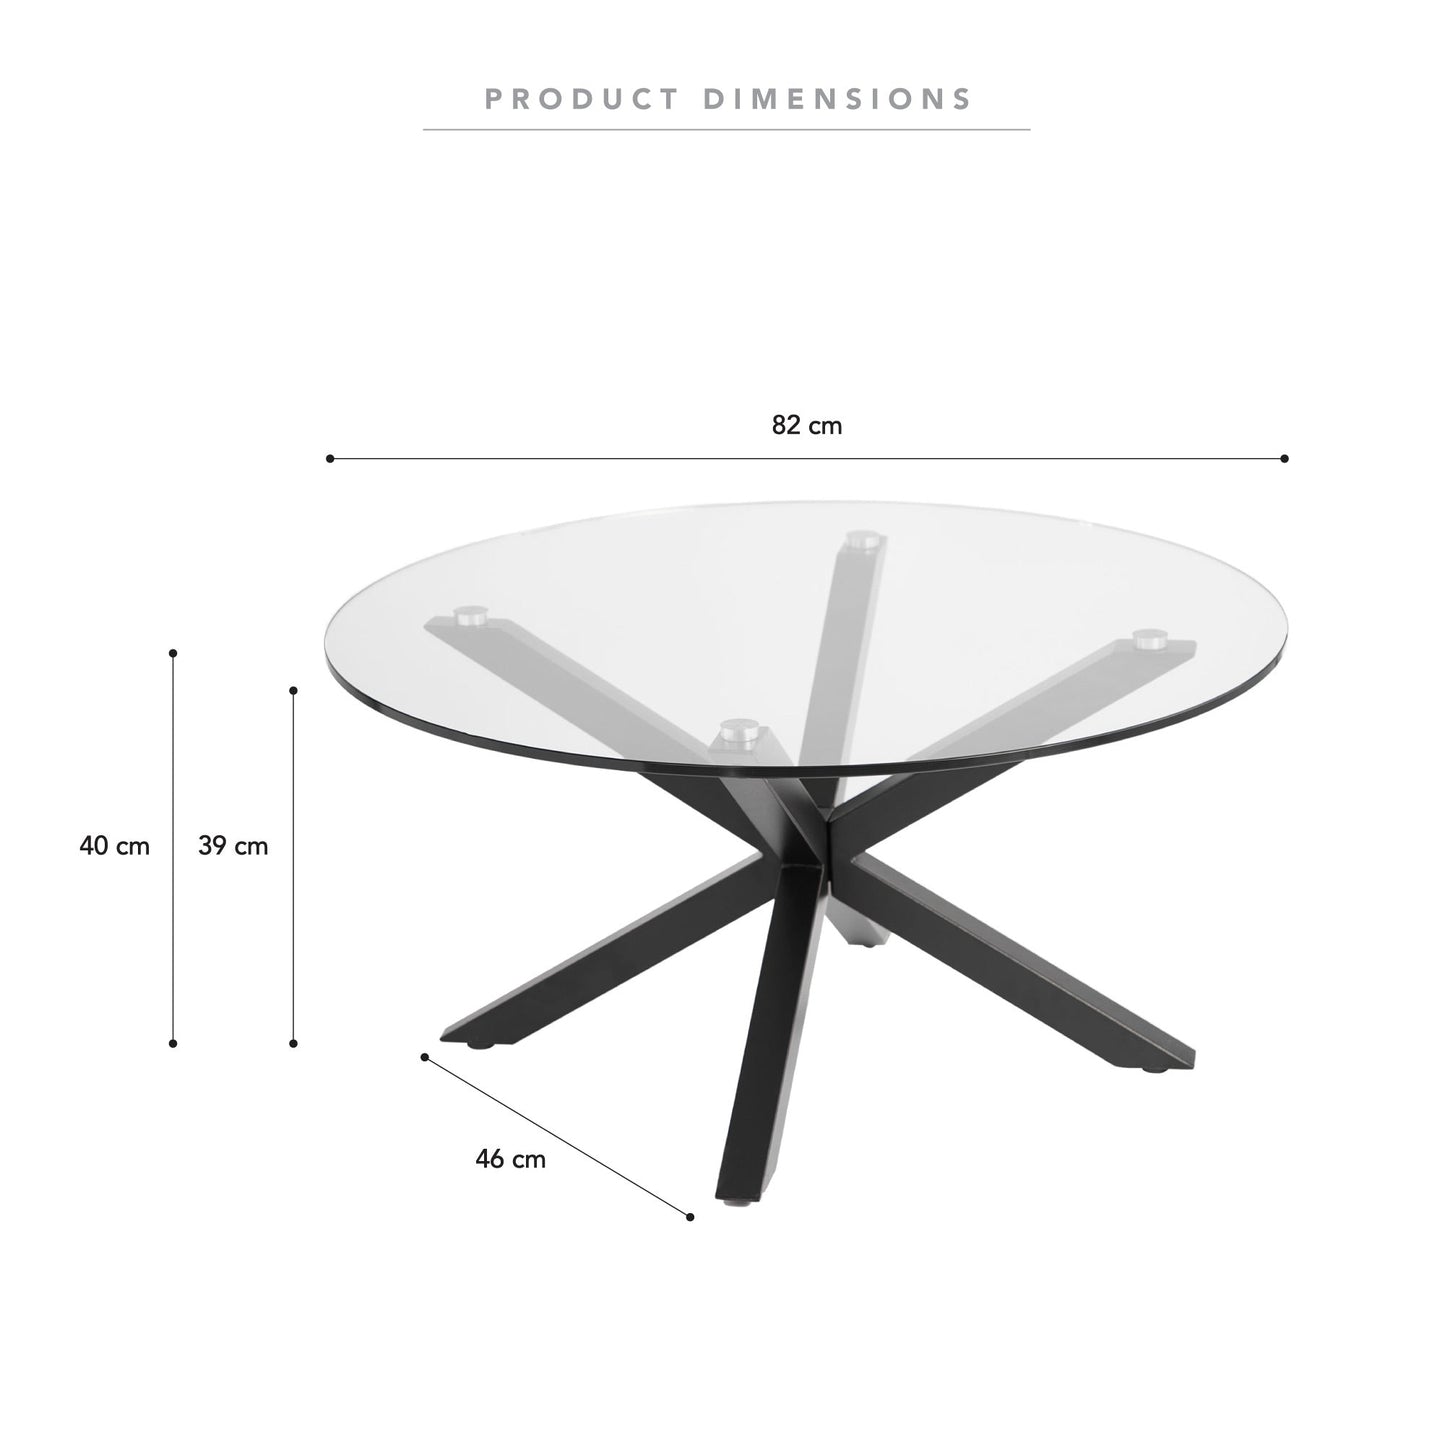 82cm Gladstone Glass Top Table Black